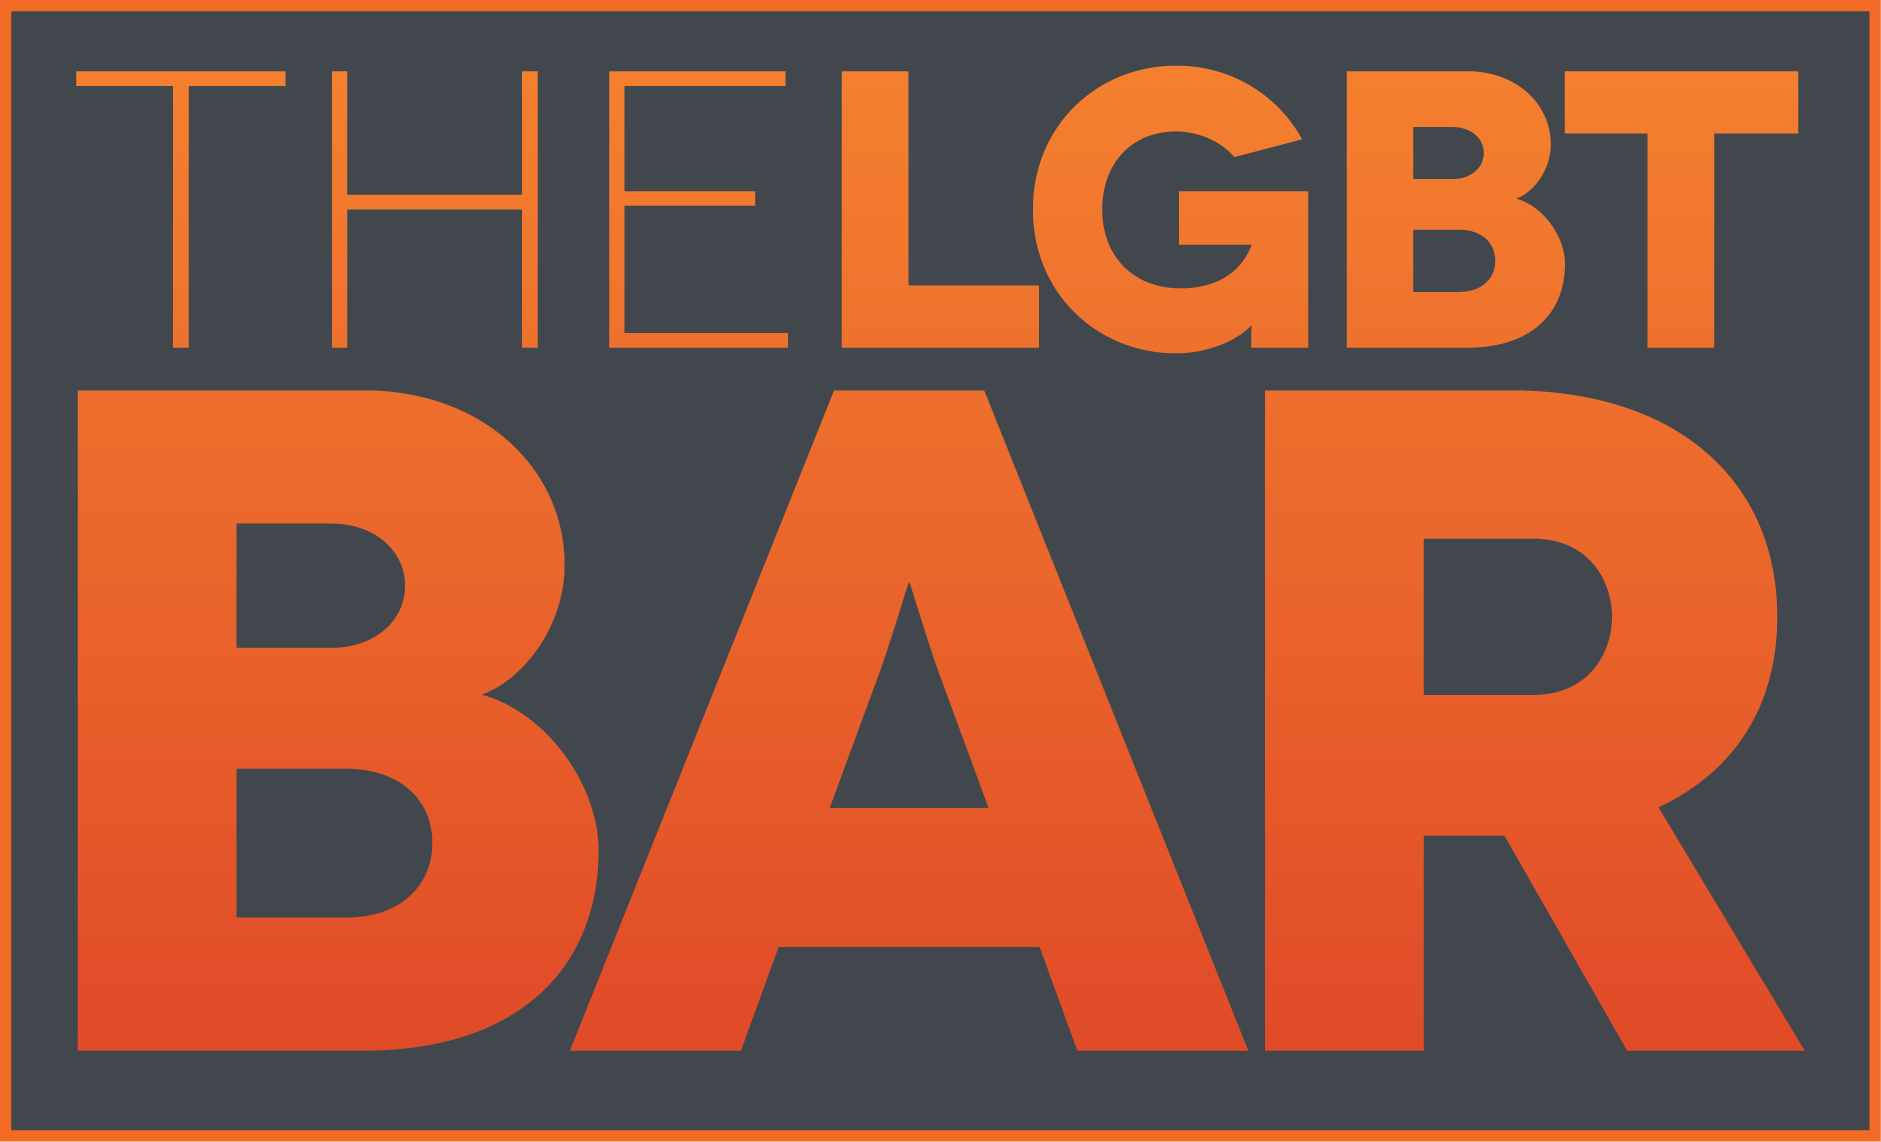 The LGBT Bar